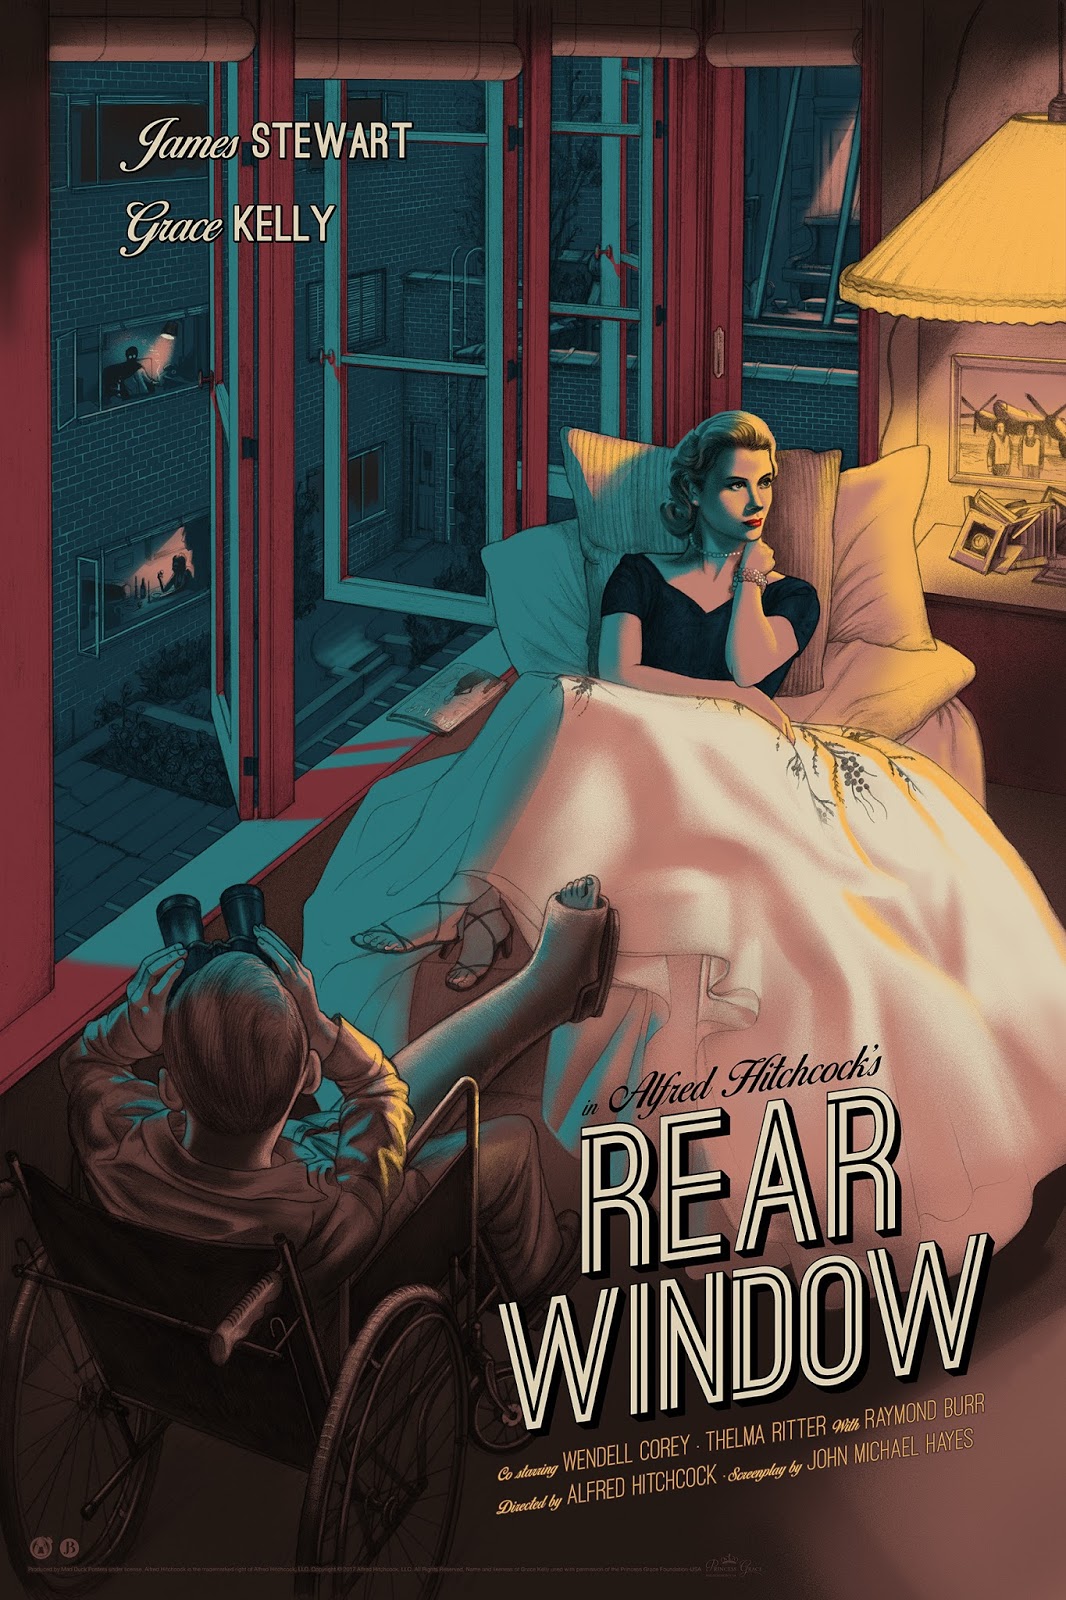 INSIDE THE ROCK POSTER FRAME BLOG: Jonathan Burton Rear Window Movie Poster Release